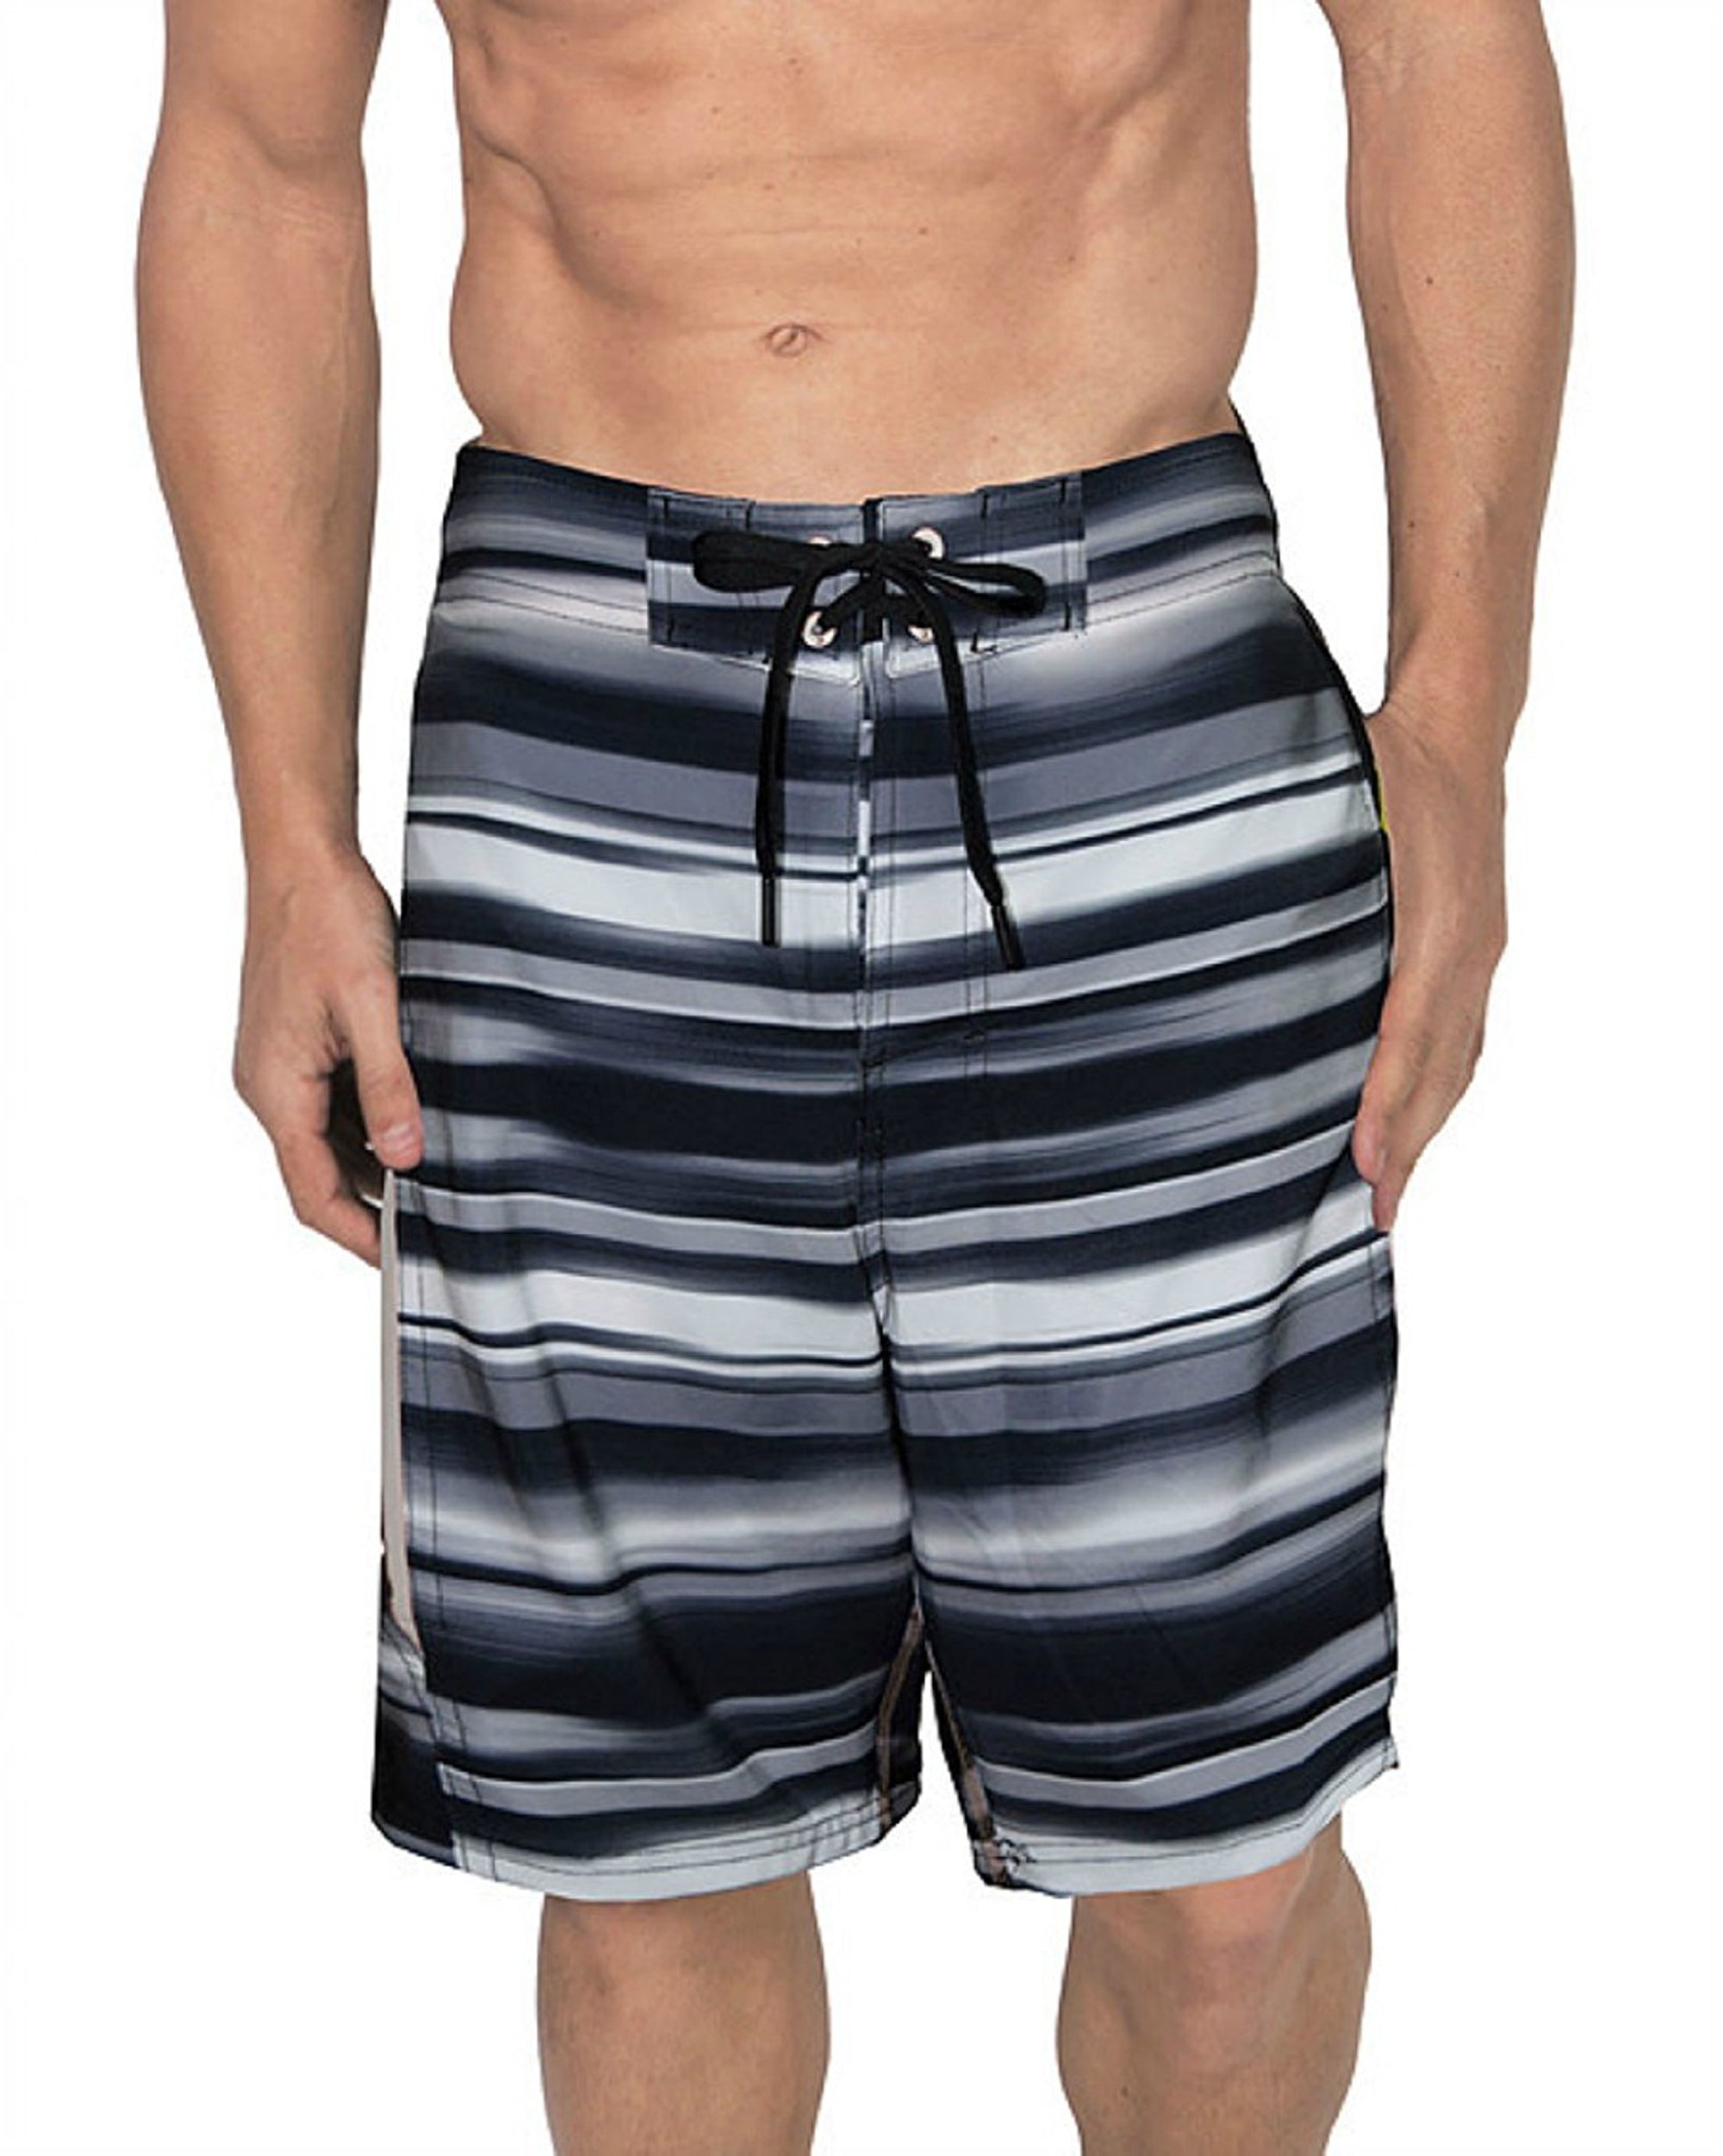 Banana Boat Adult Men Board Shorts UPF 50+ Fabric Is Made To Block 99% ...